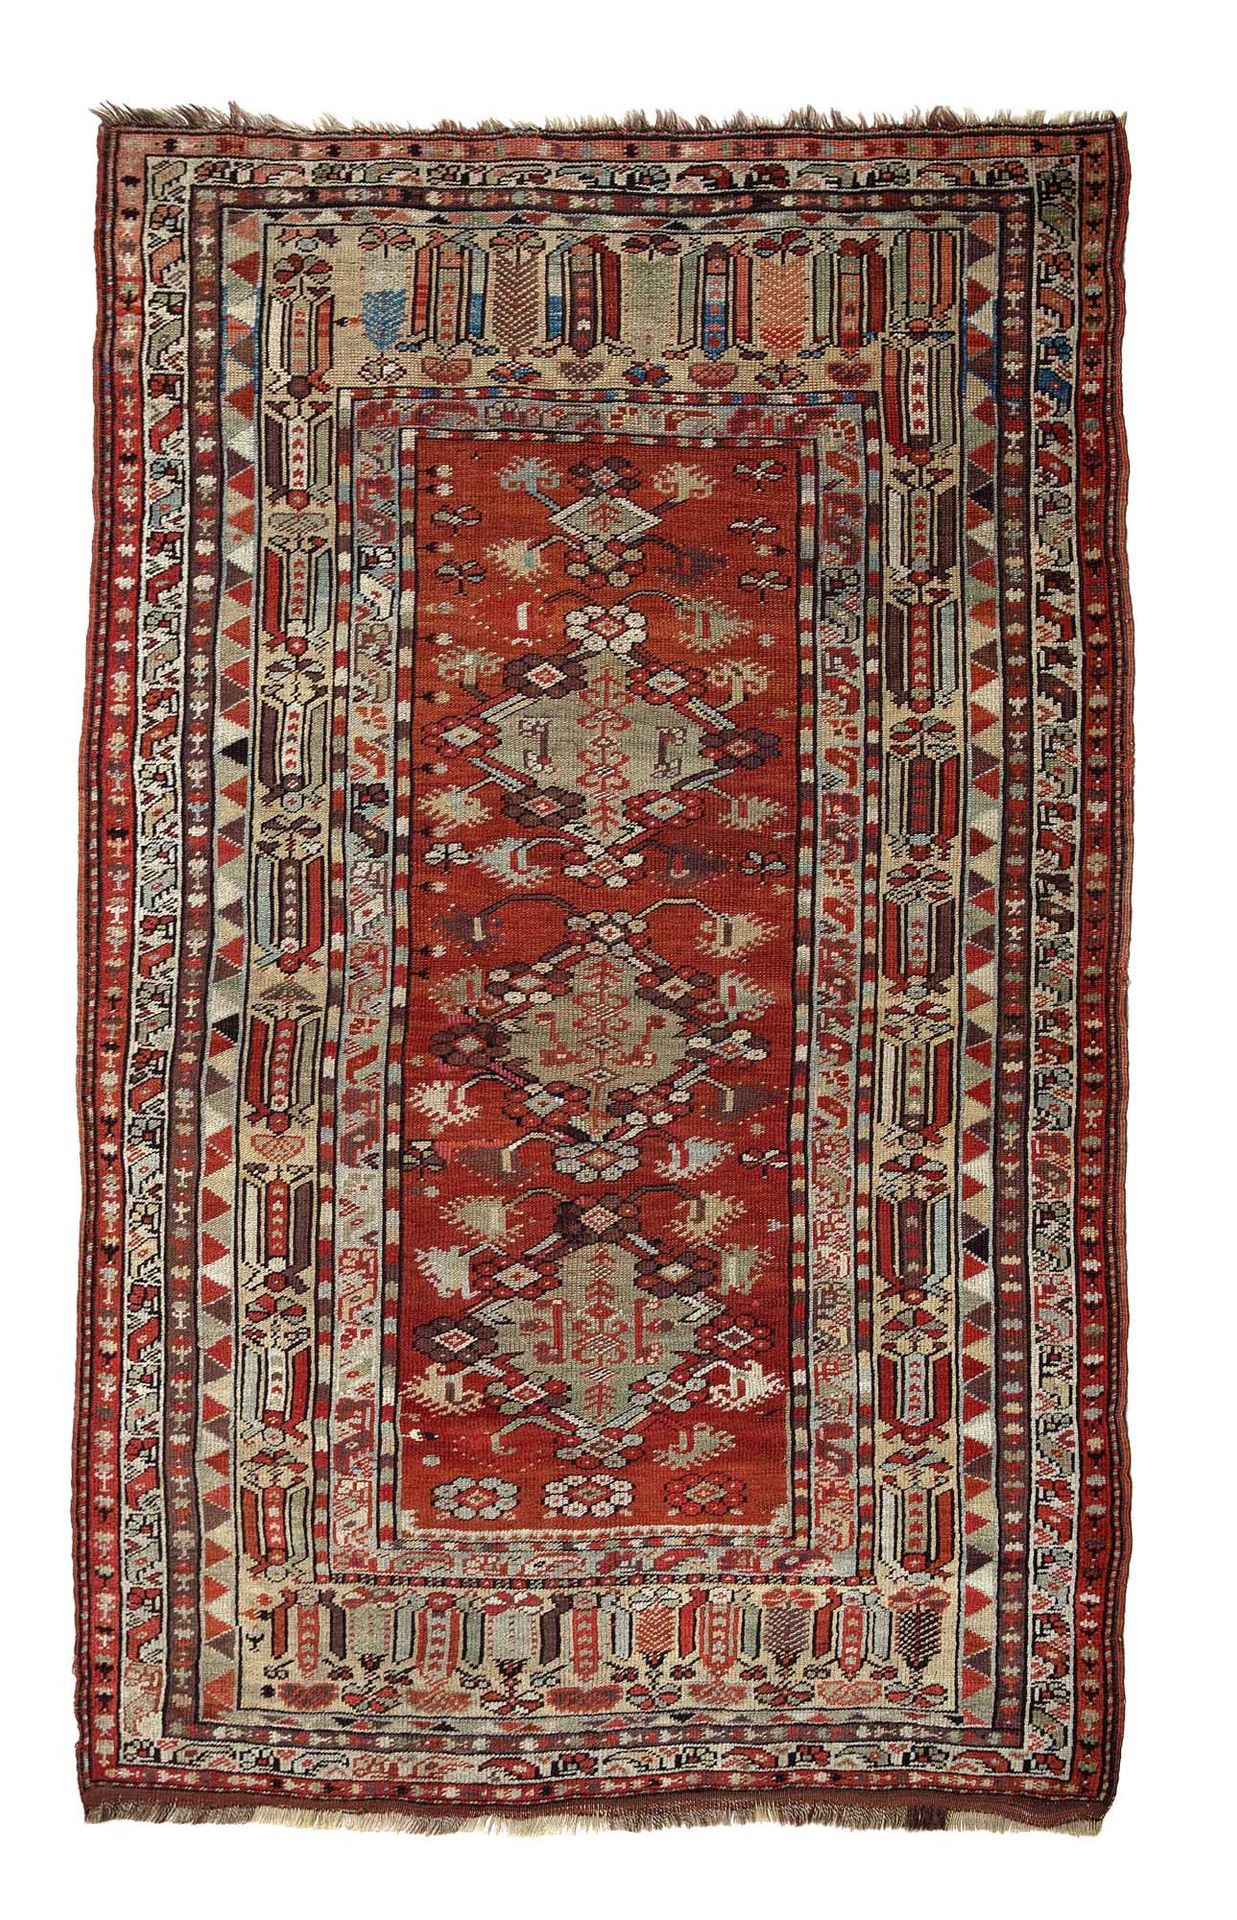 Null 梅拉斯地毯（小亚细亚），19世纪末

尺寸：160 x 110厘米

技术特点 : 羊毛基础上的羊毛绒。

砖红色的场地上装饰着三朵风格迥异的花束，周&hellip;